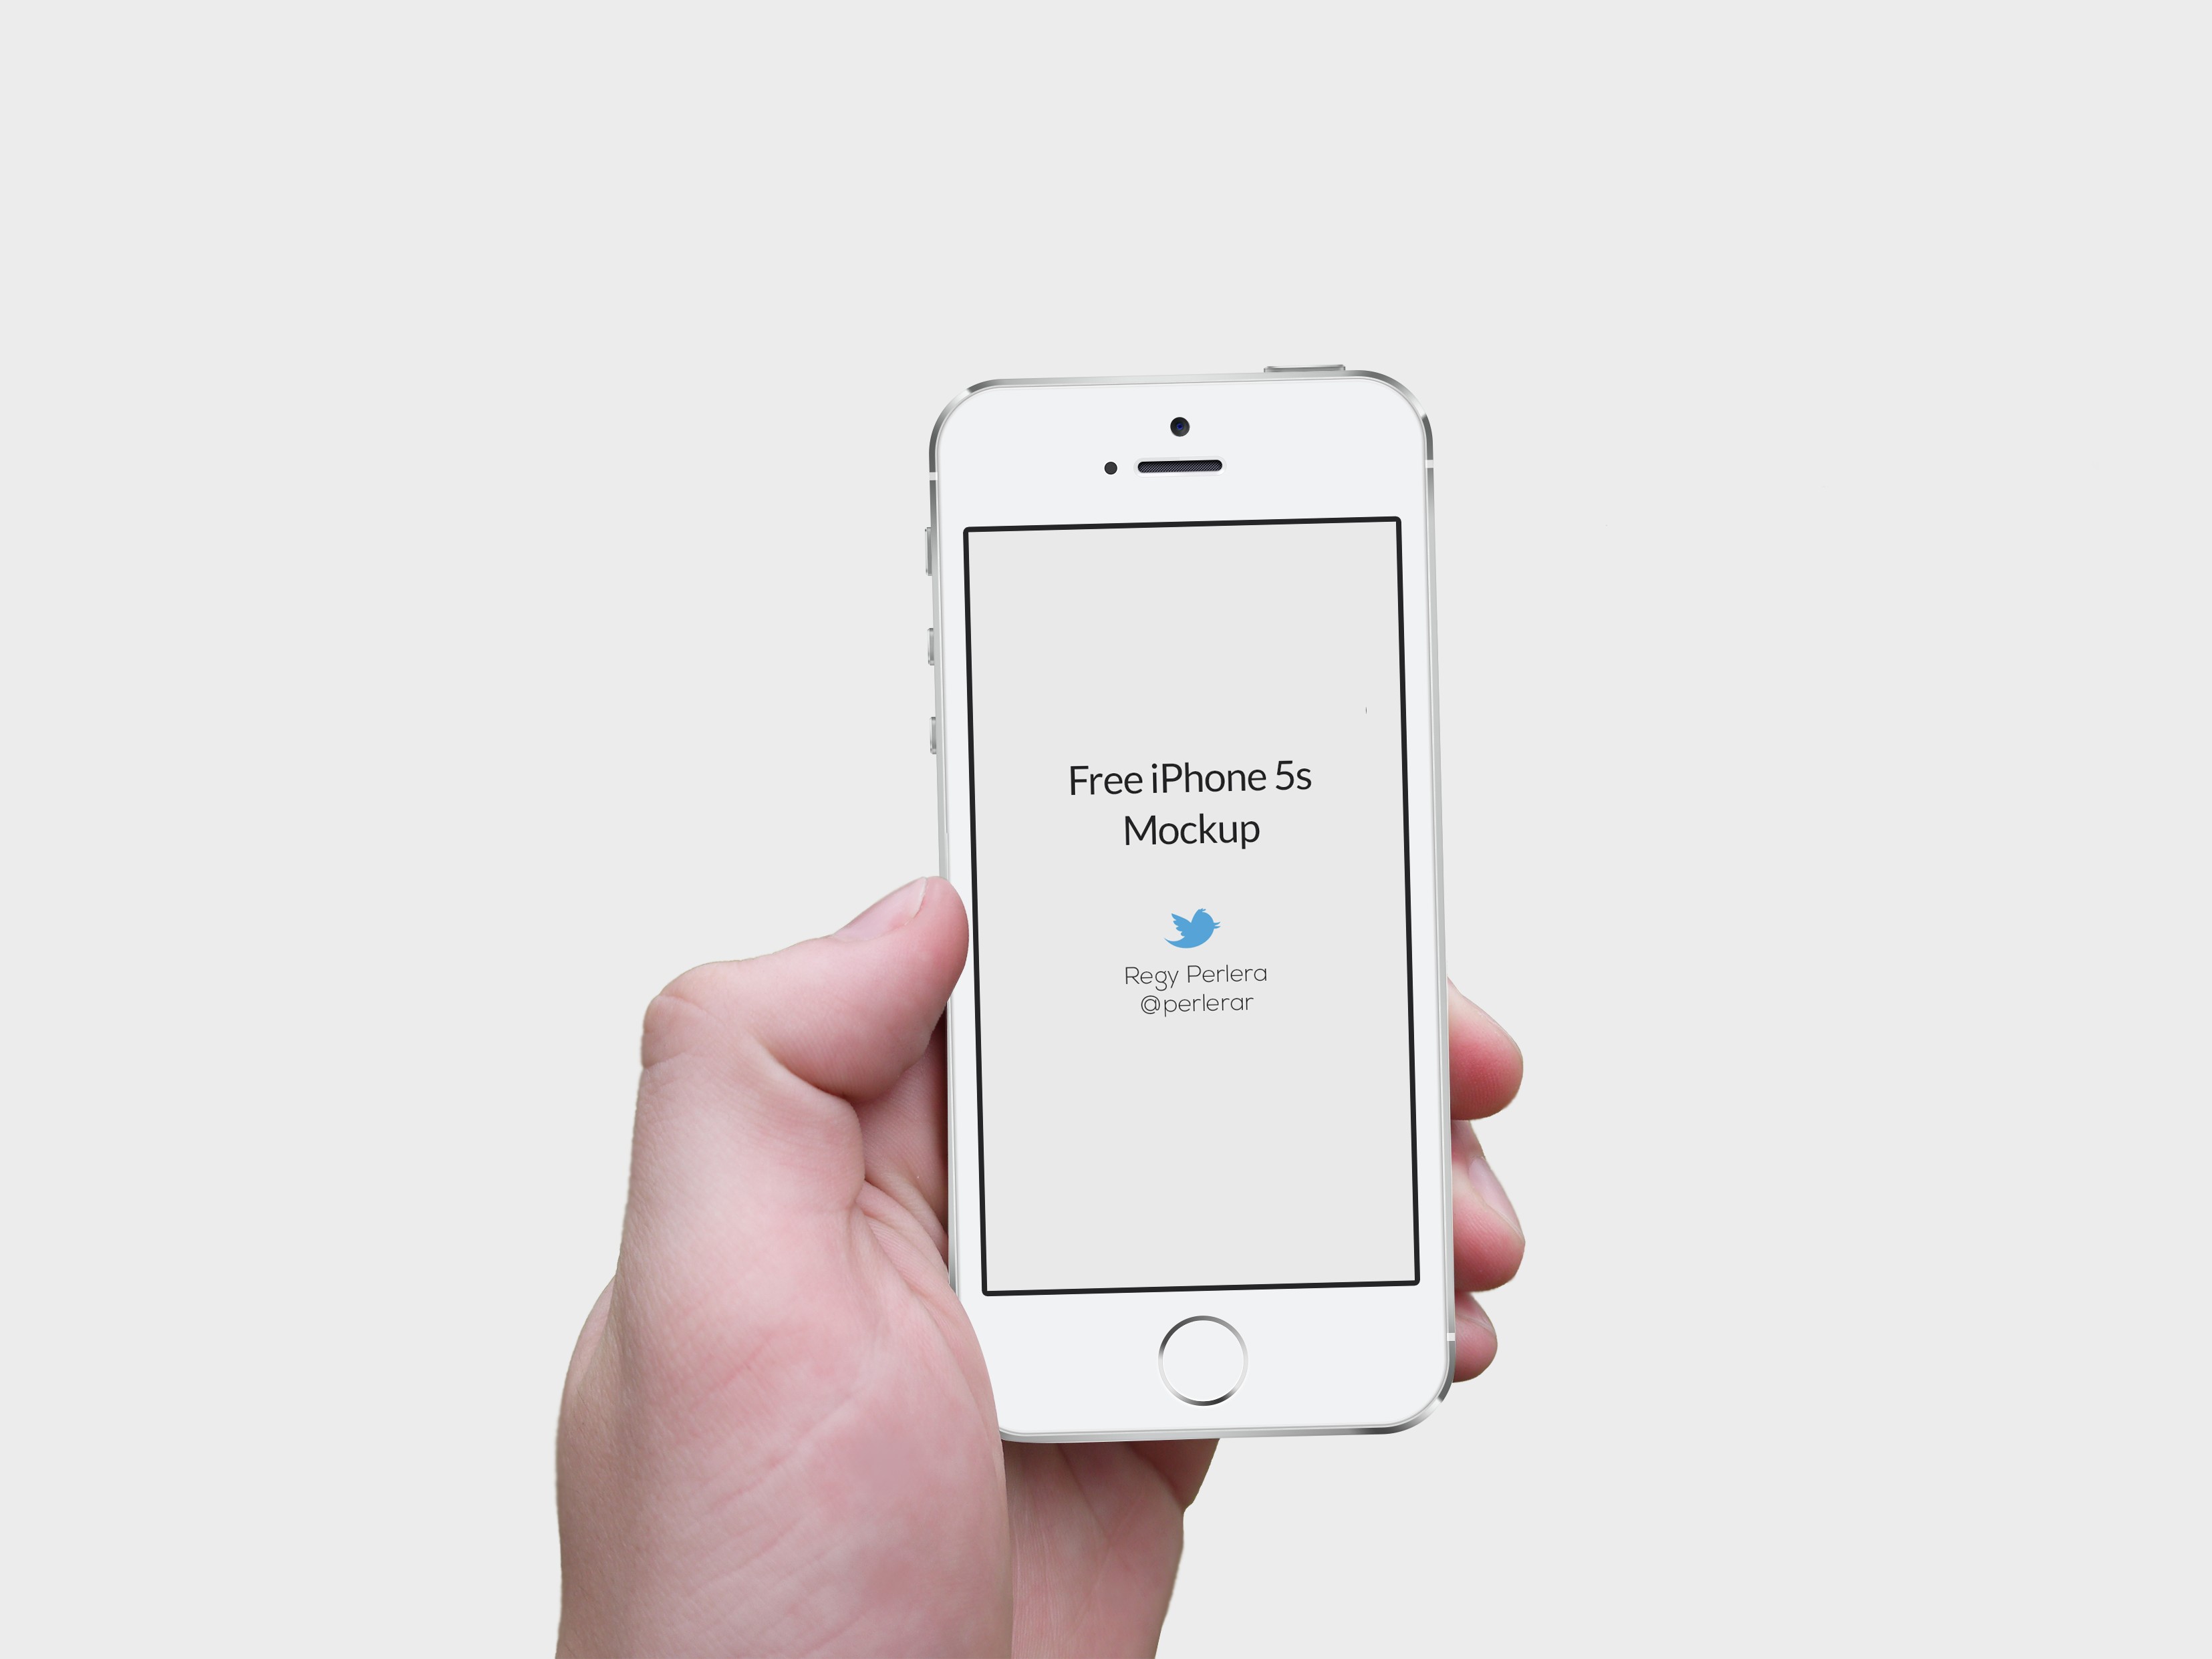 iPhone 5 Papercraft Ipad and iPhone 5s Mockups Template Psd